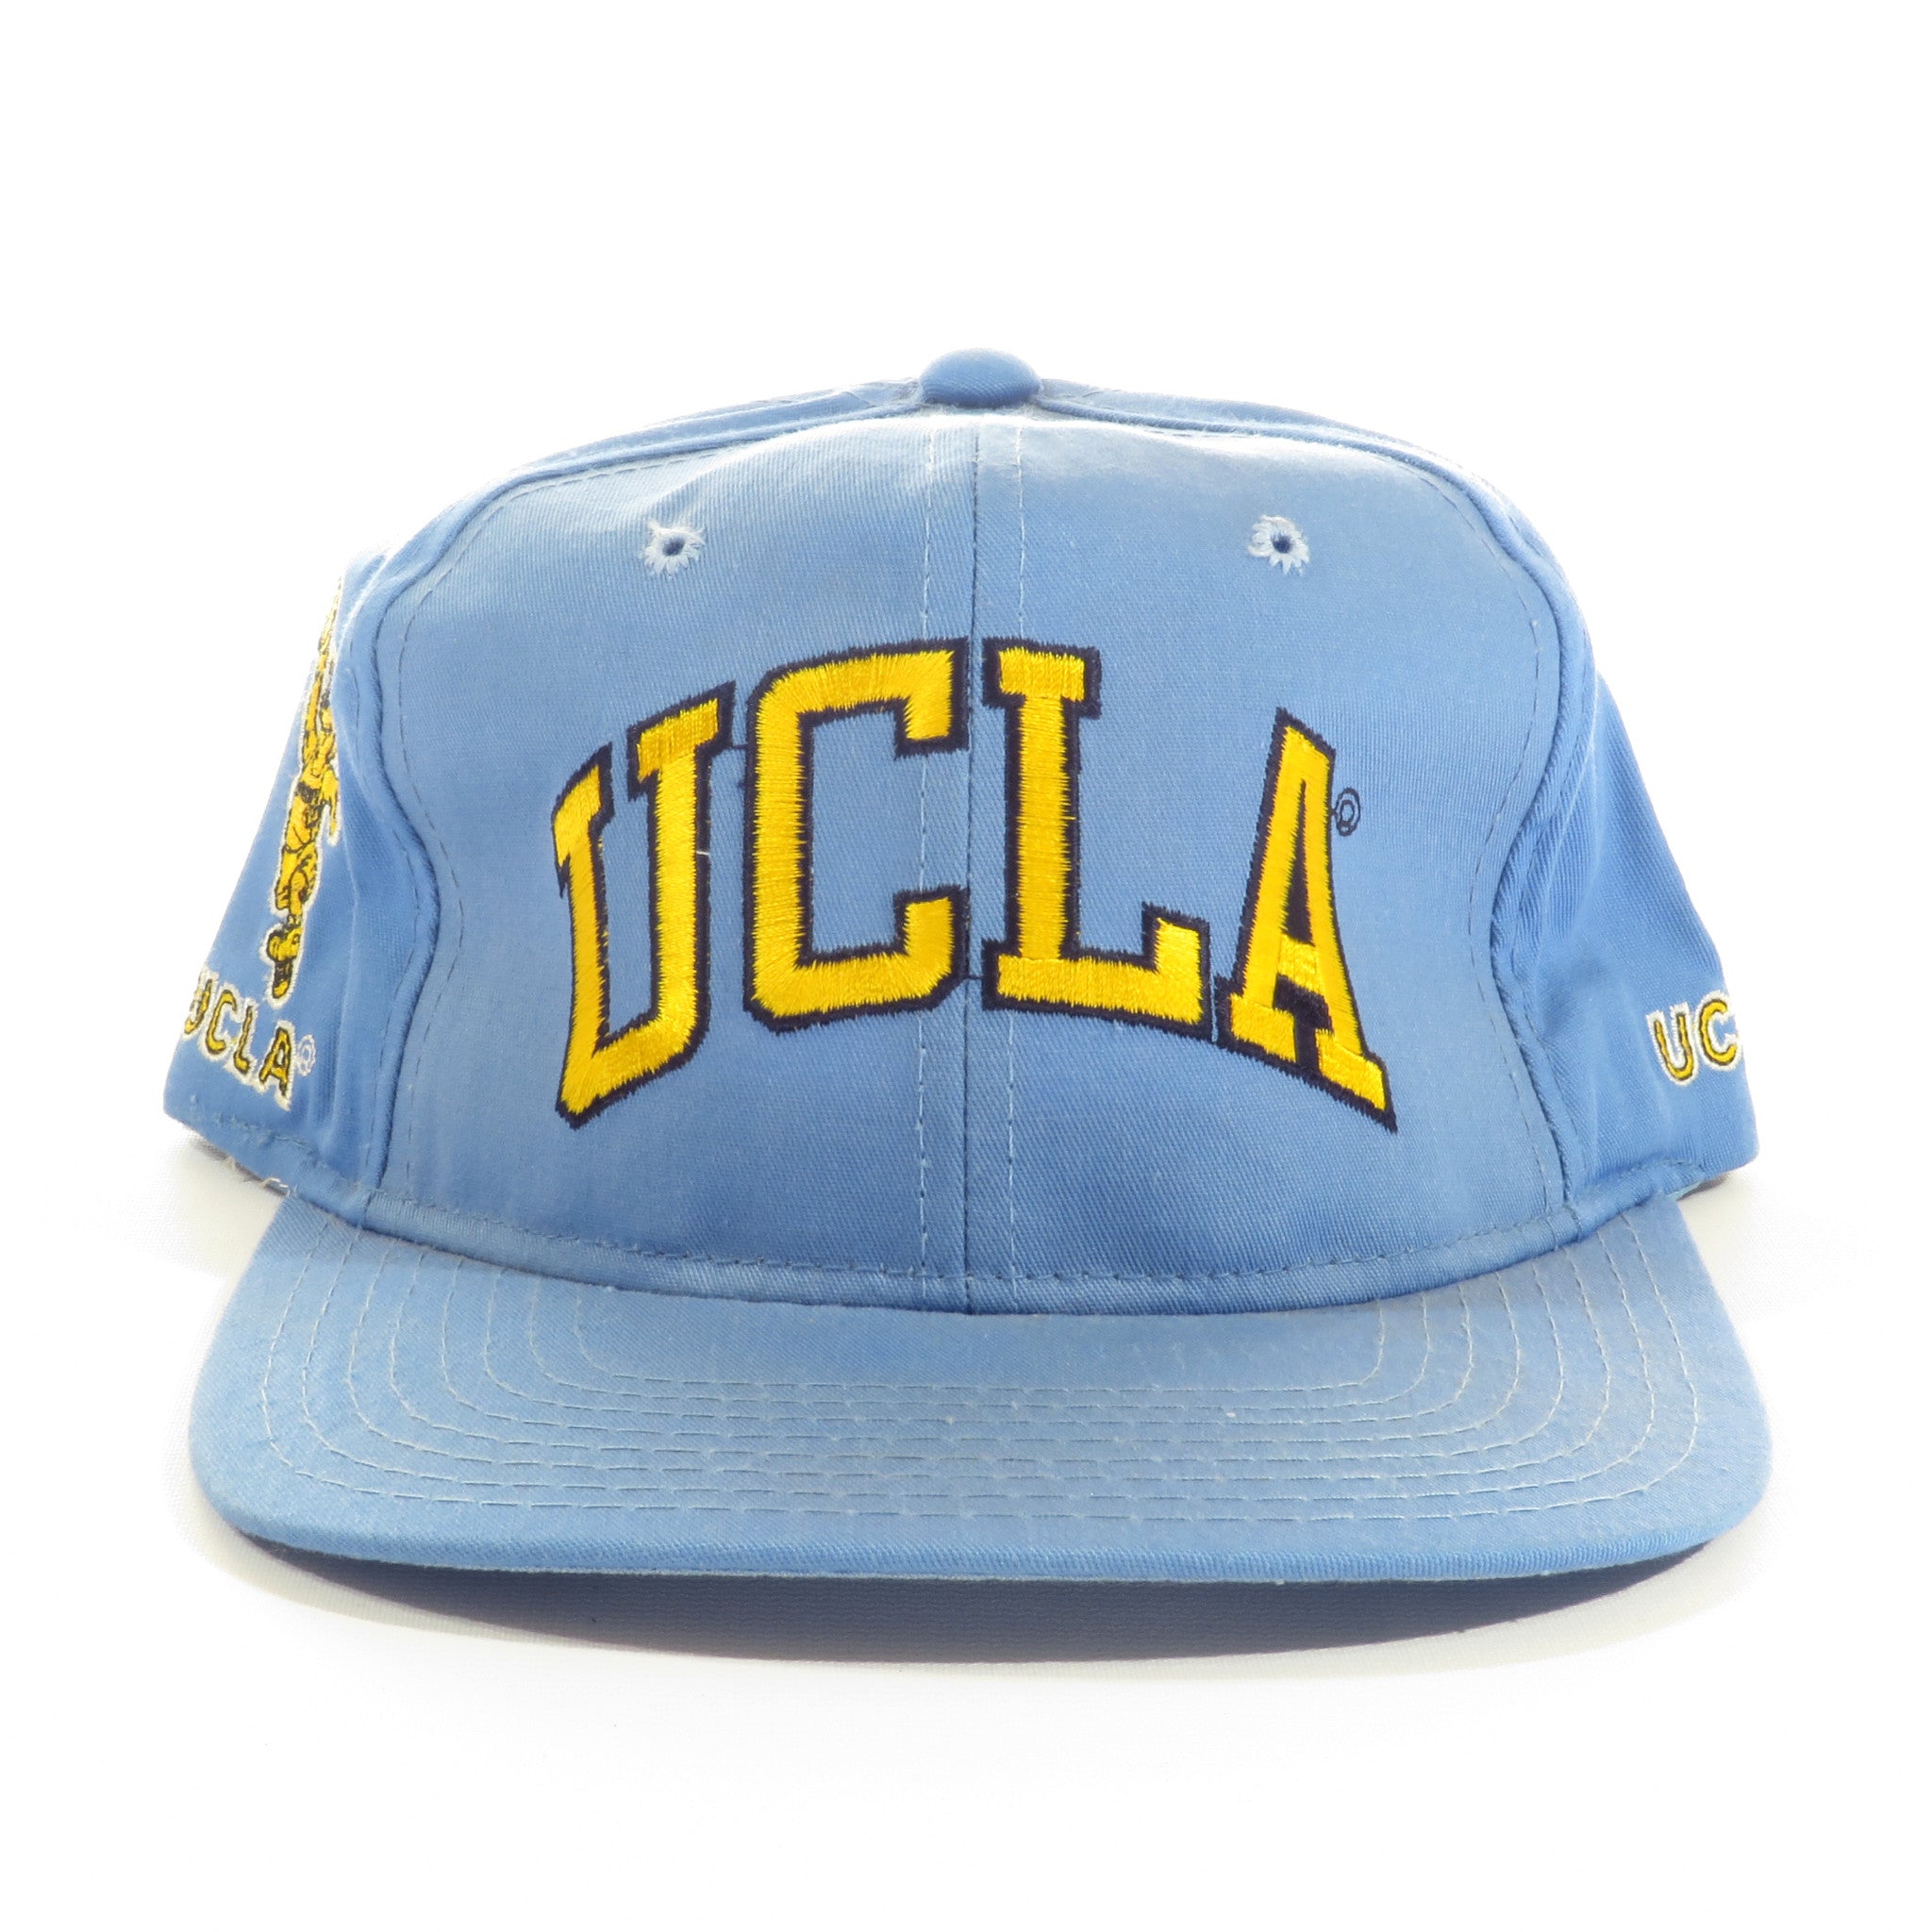 UCLA Bruins Youngan Snapback Hat